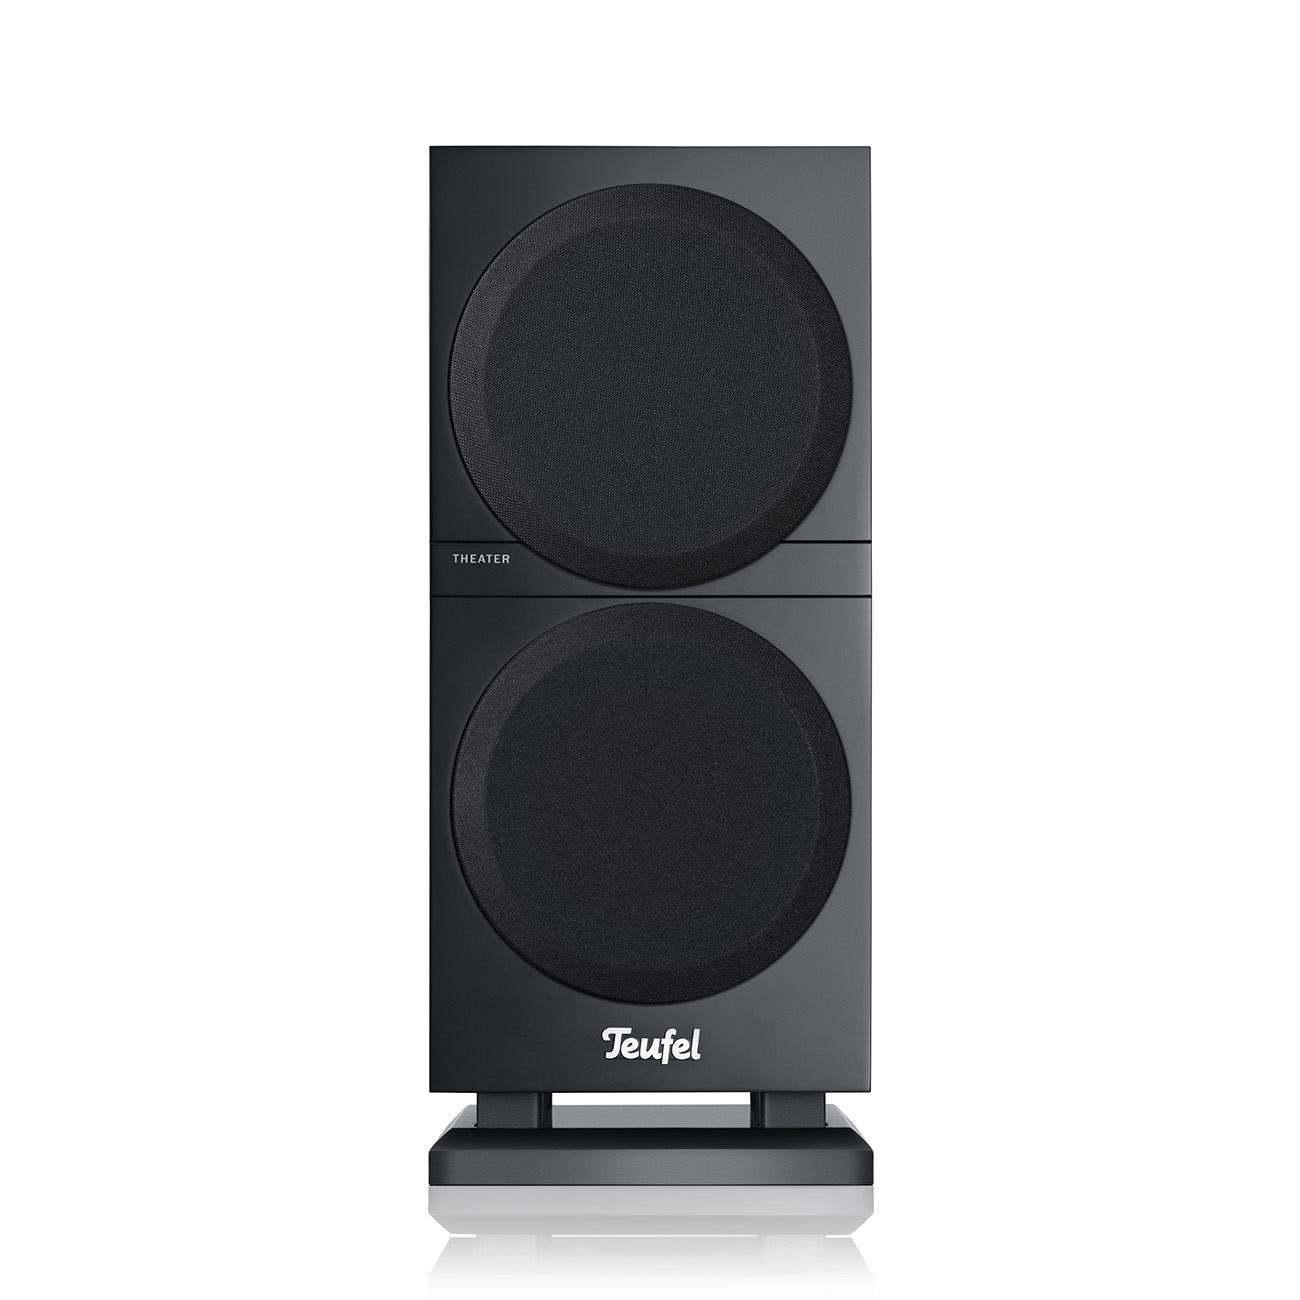 TEUFEL THEATER Passiv-Lautsprecher, Schwarz Stereo-Regallautsprecher 500S